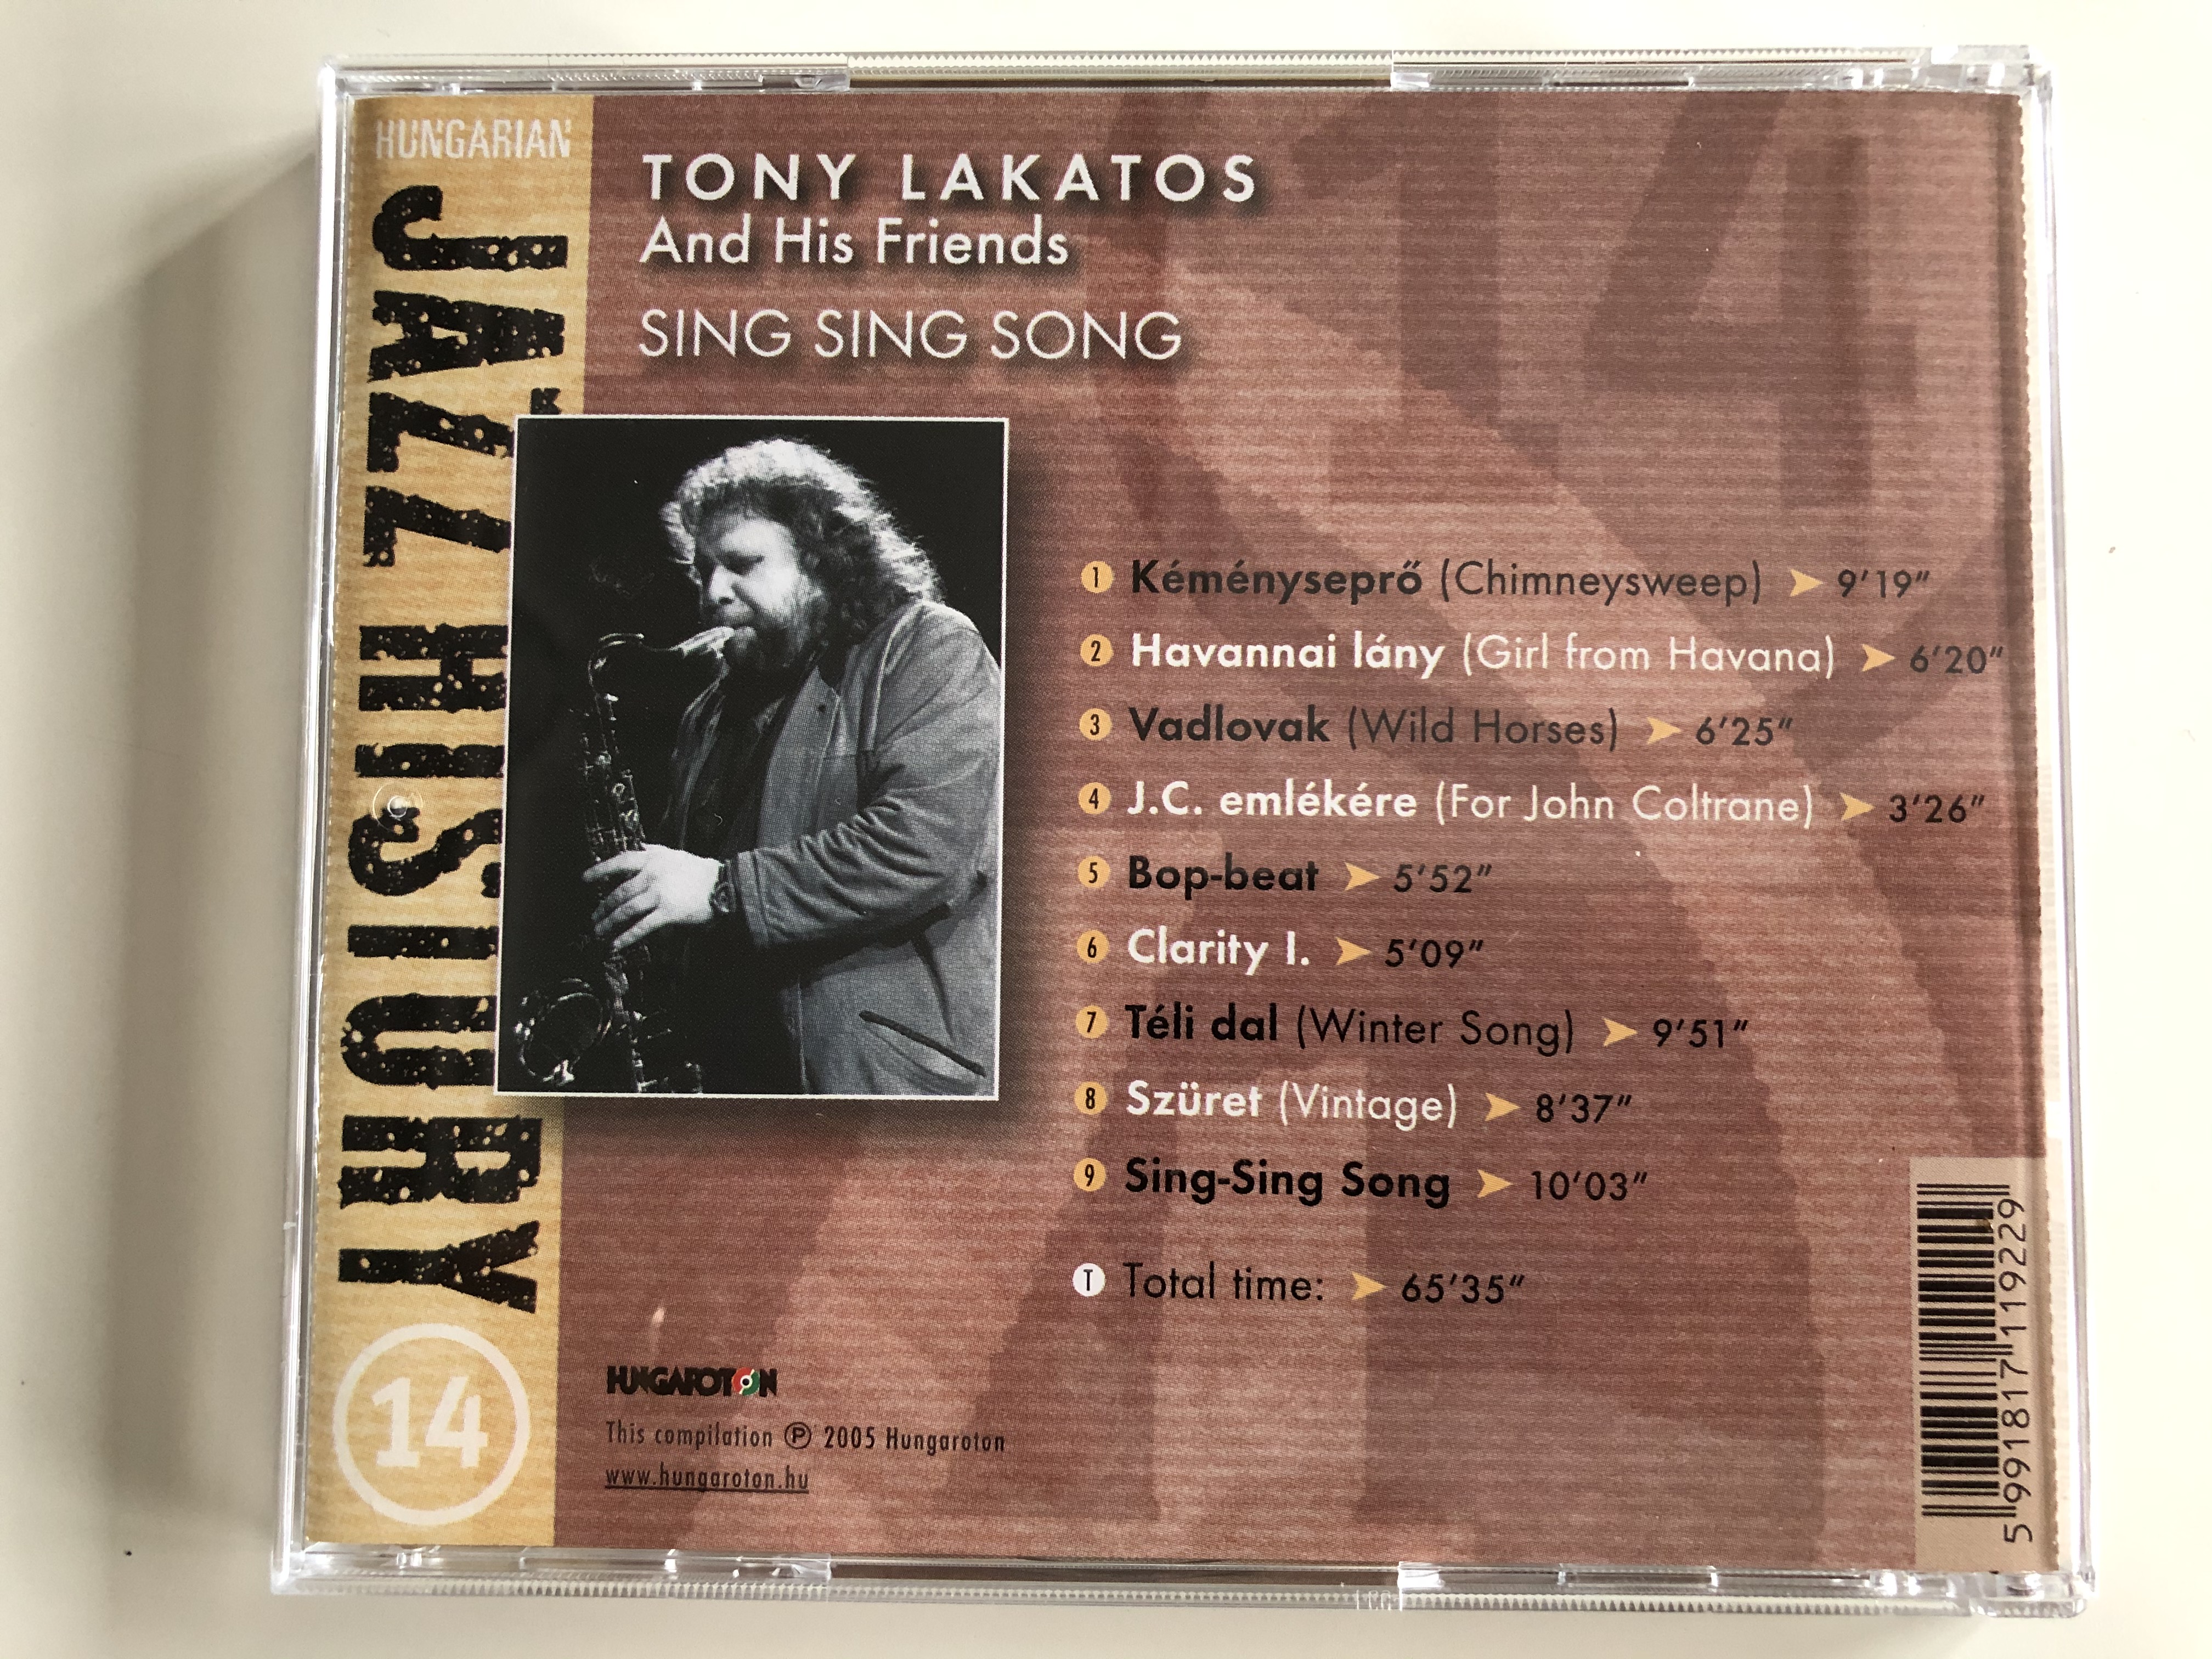 tony-lakatos-and-his-friends-sing-sing-song-hungarian-jazz-history-14-hungaroton-audio-cd-2005-hcd-71192-8-.jpg